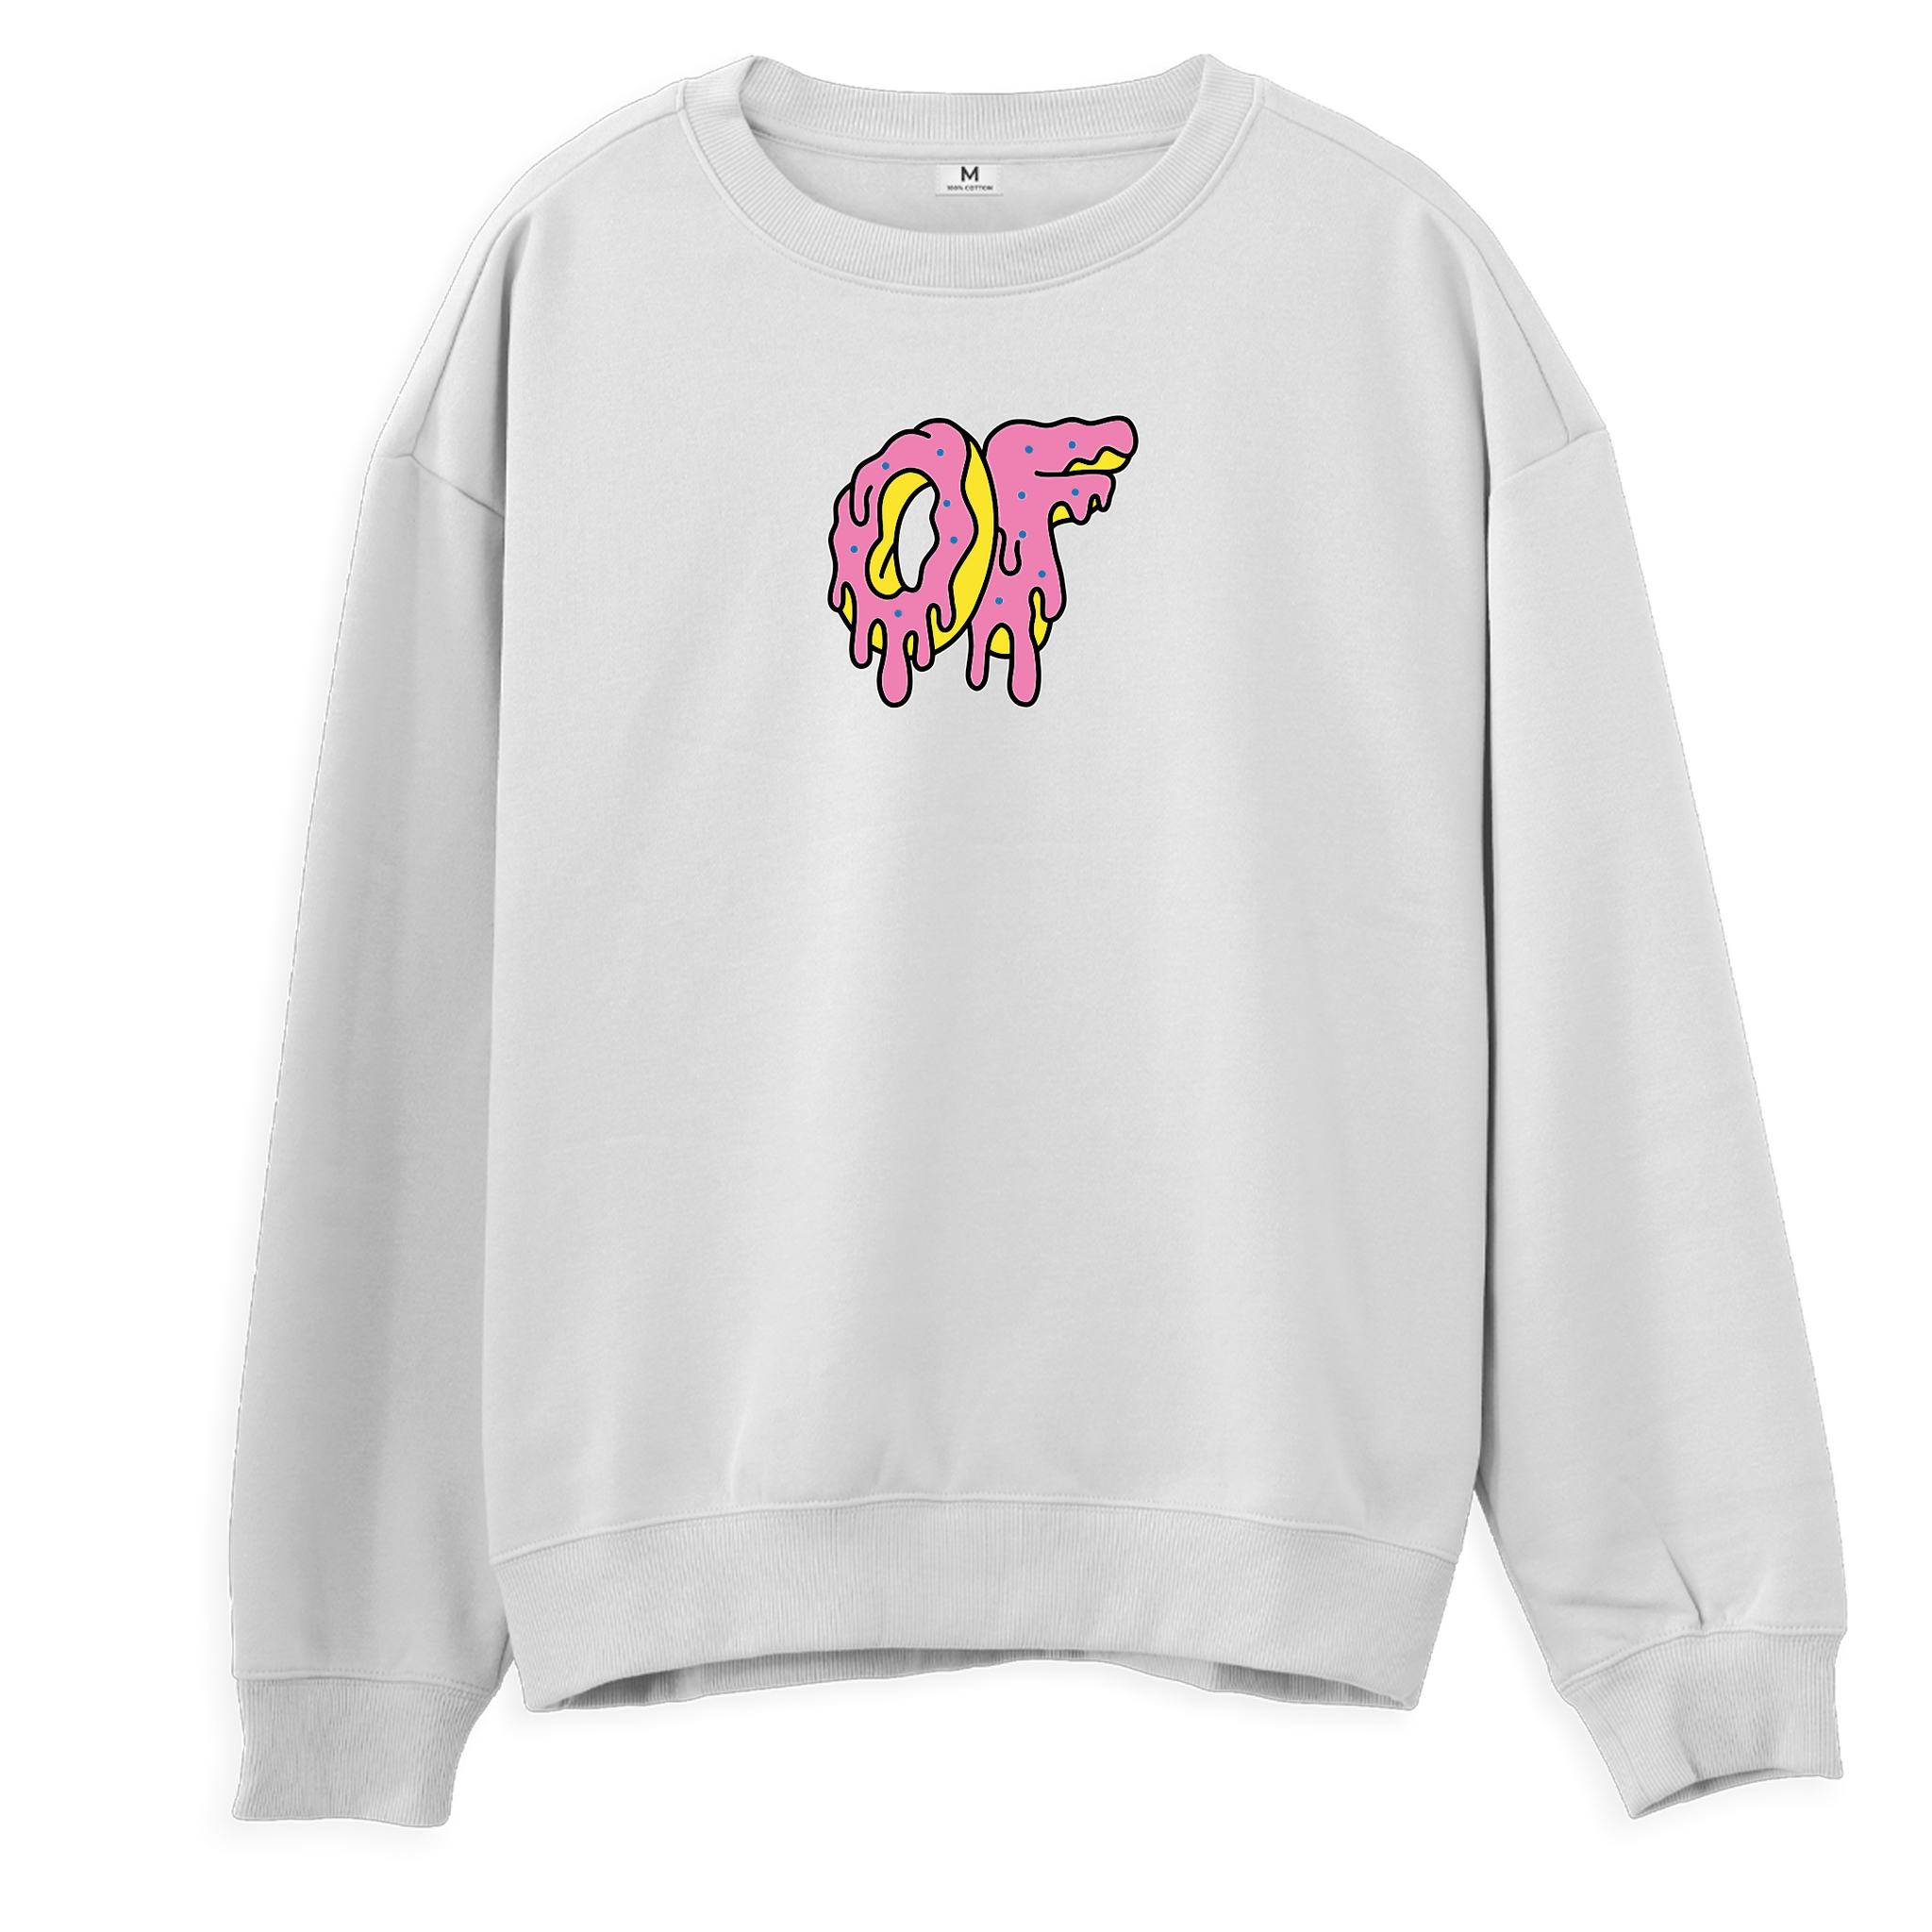 Odd Future - Sweatshirt